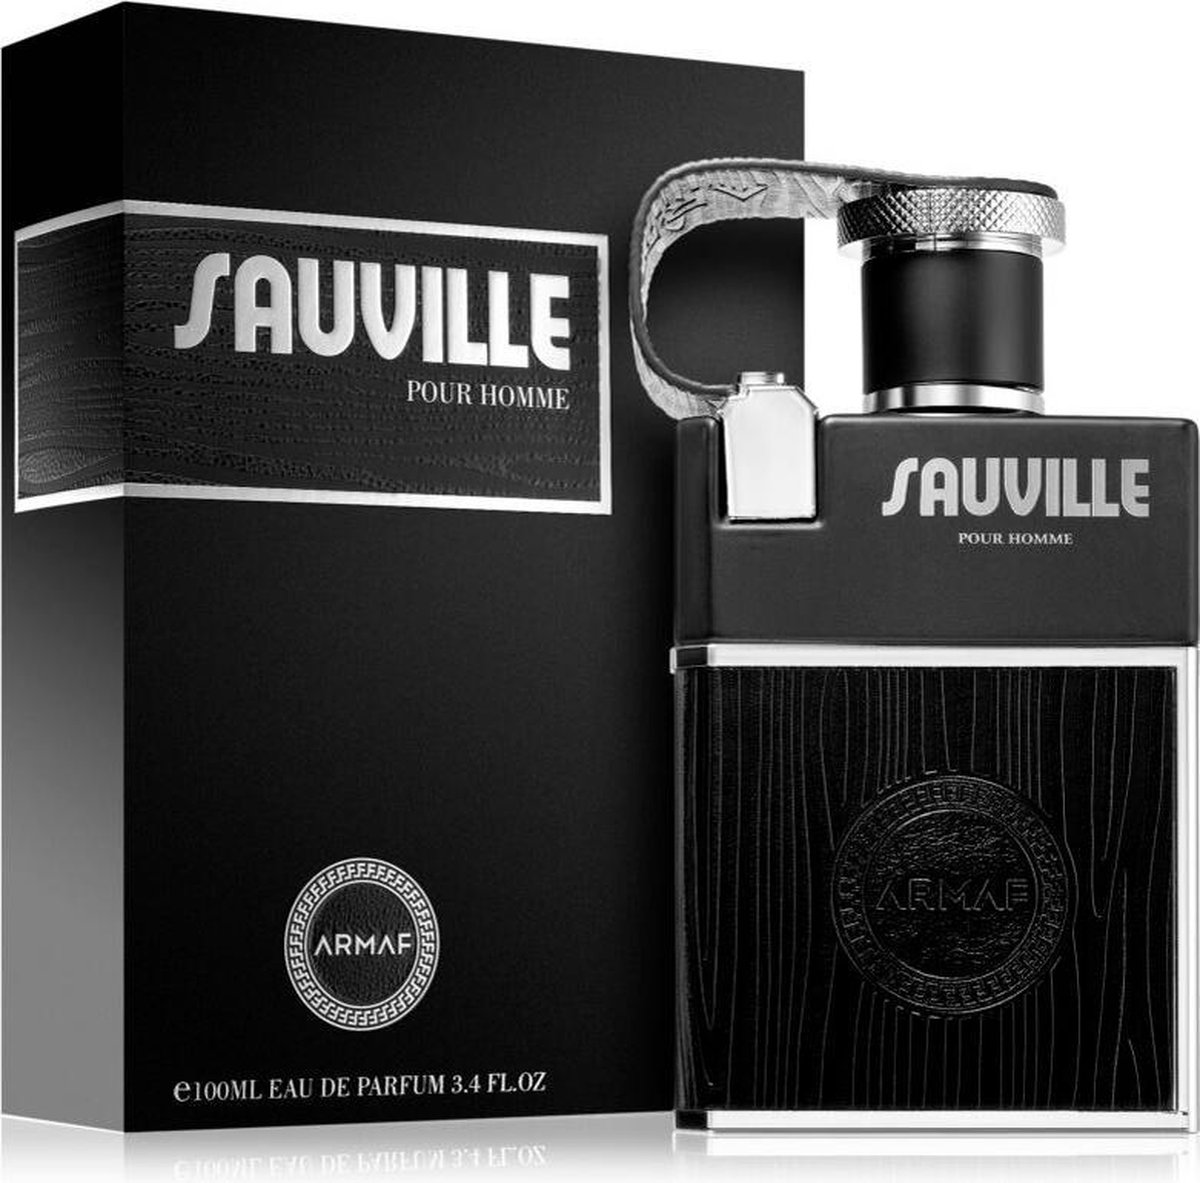 Armaf Sauville by Armaf 100 ml - Eau De Parfum Spray